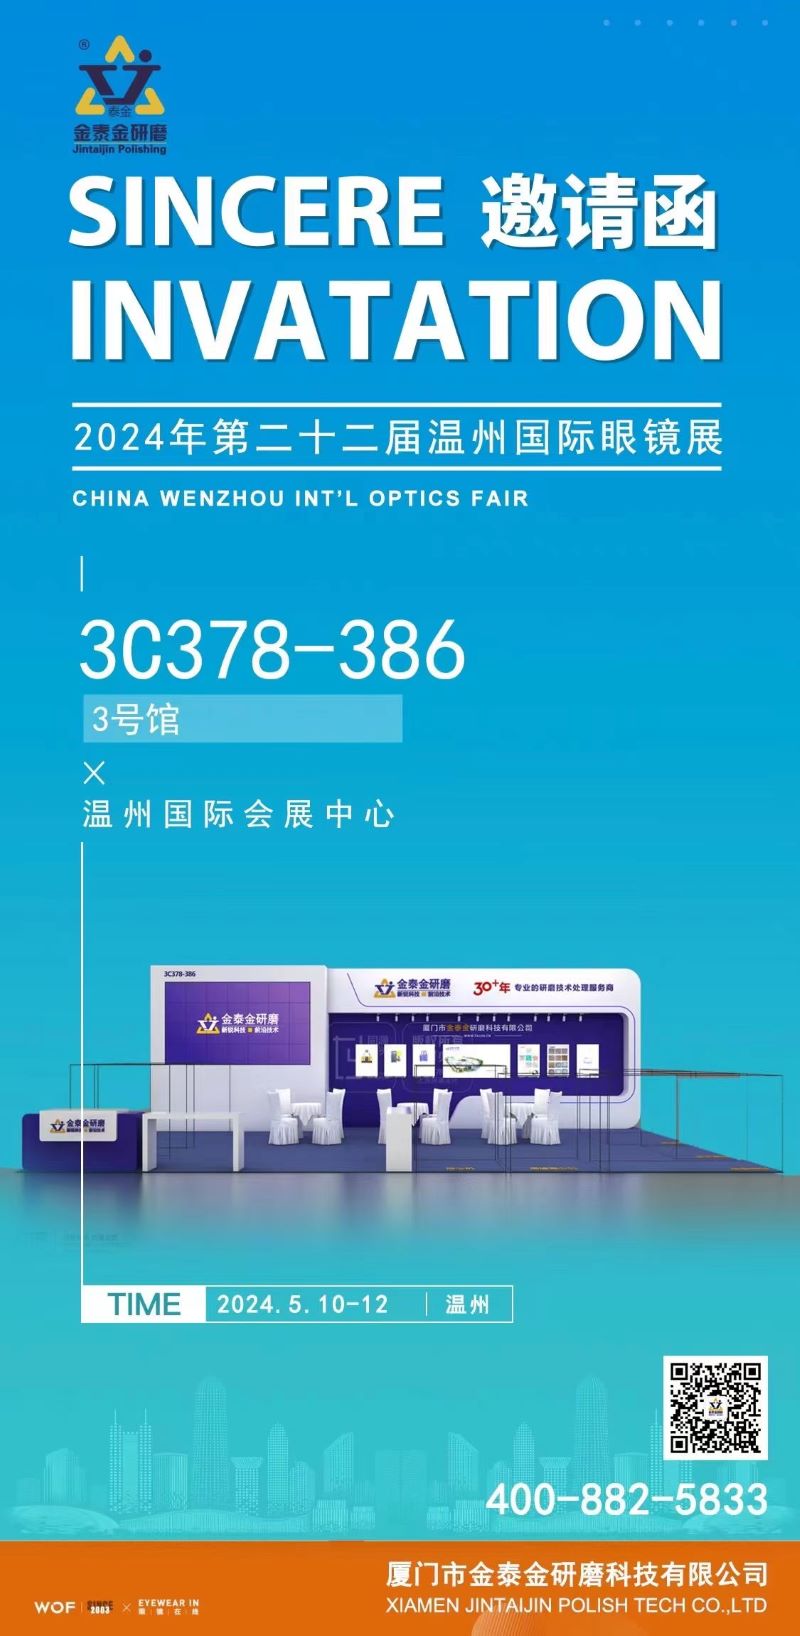 Jintaijin Polishing Technology Co. Announces Participation in the 2024 Wenzhou International Optics Fair